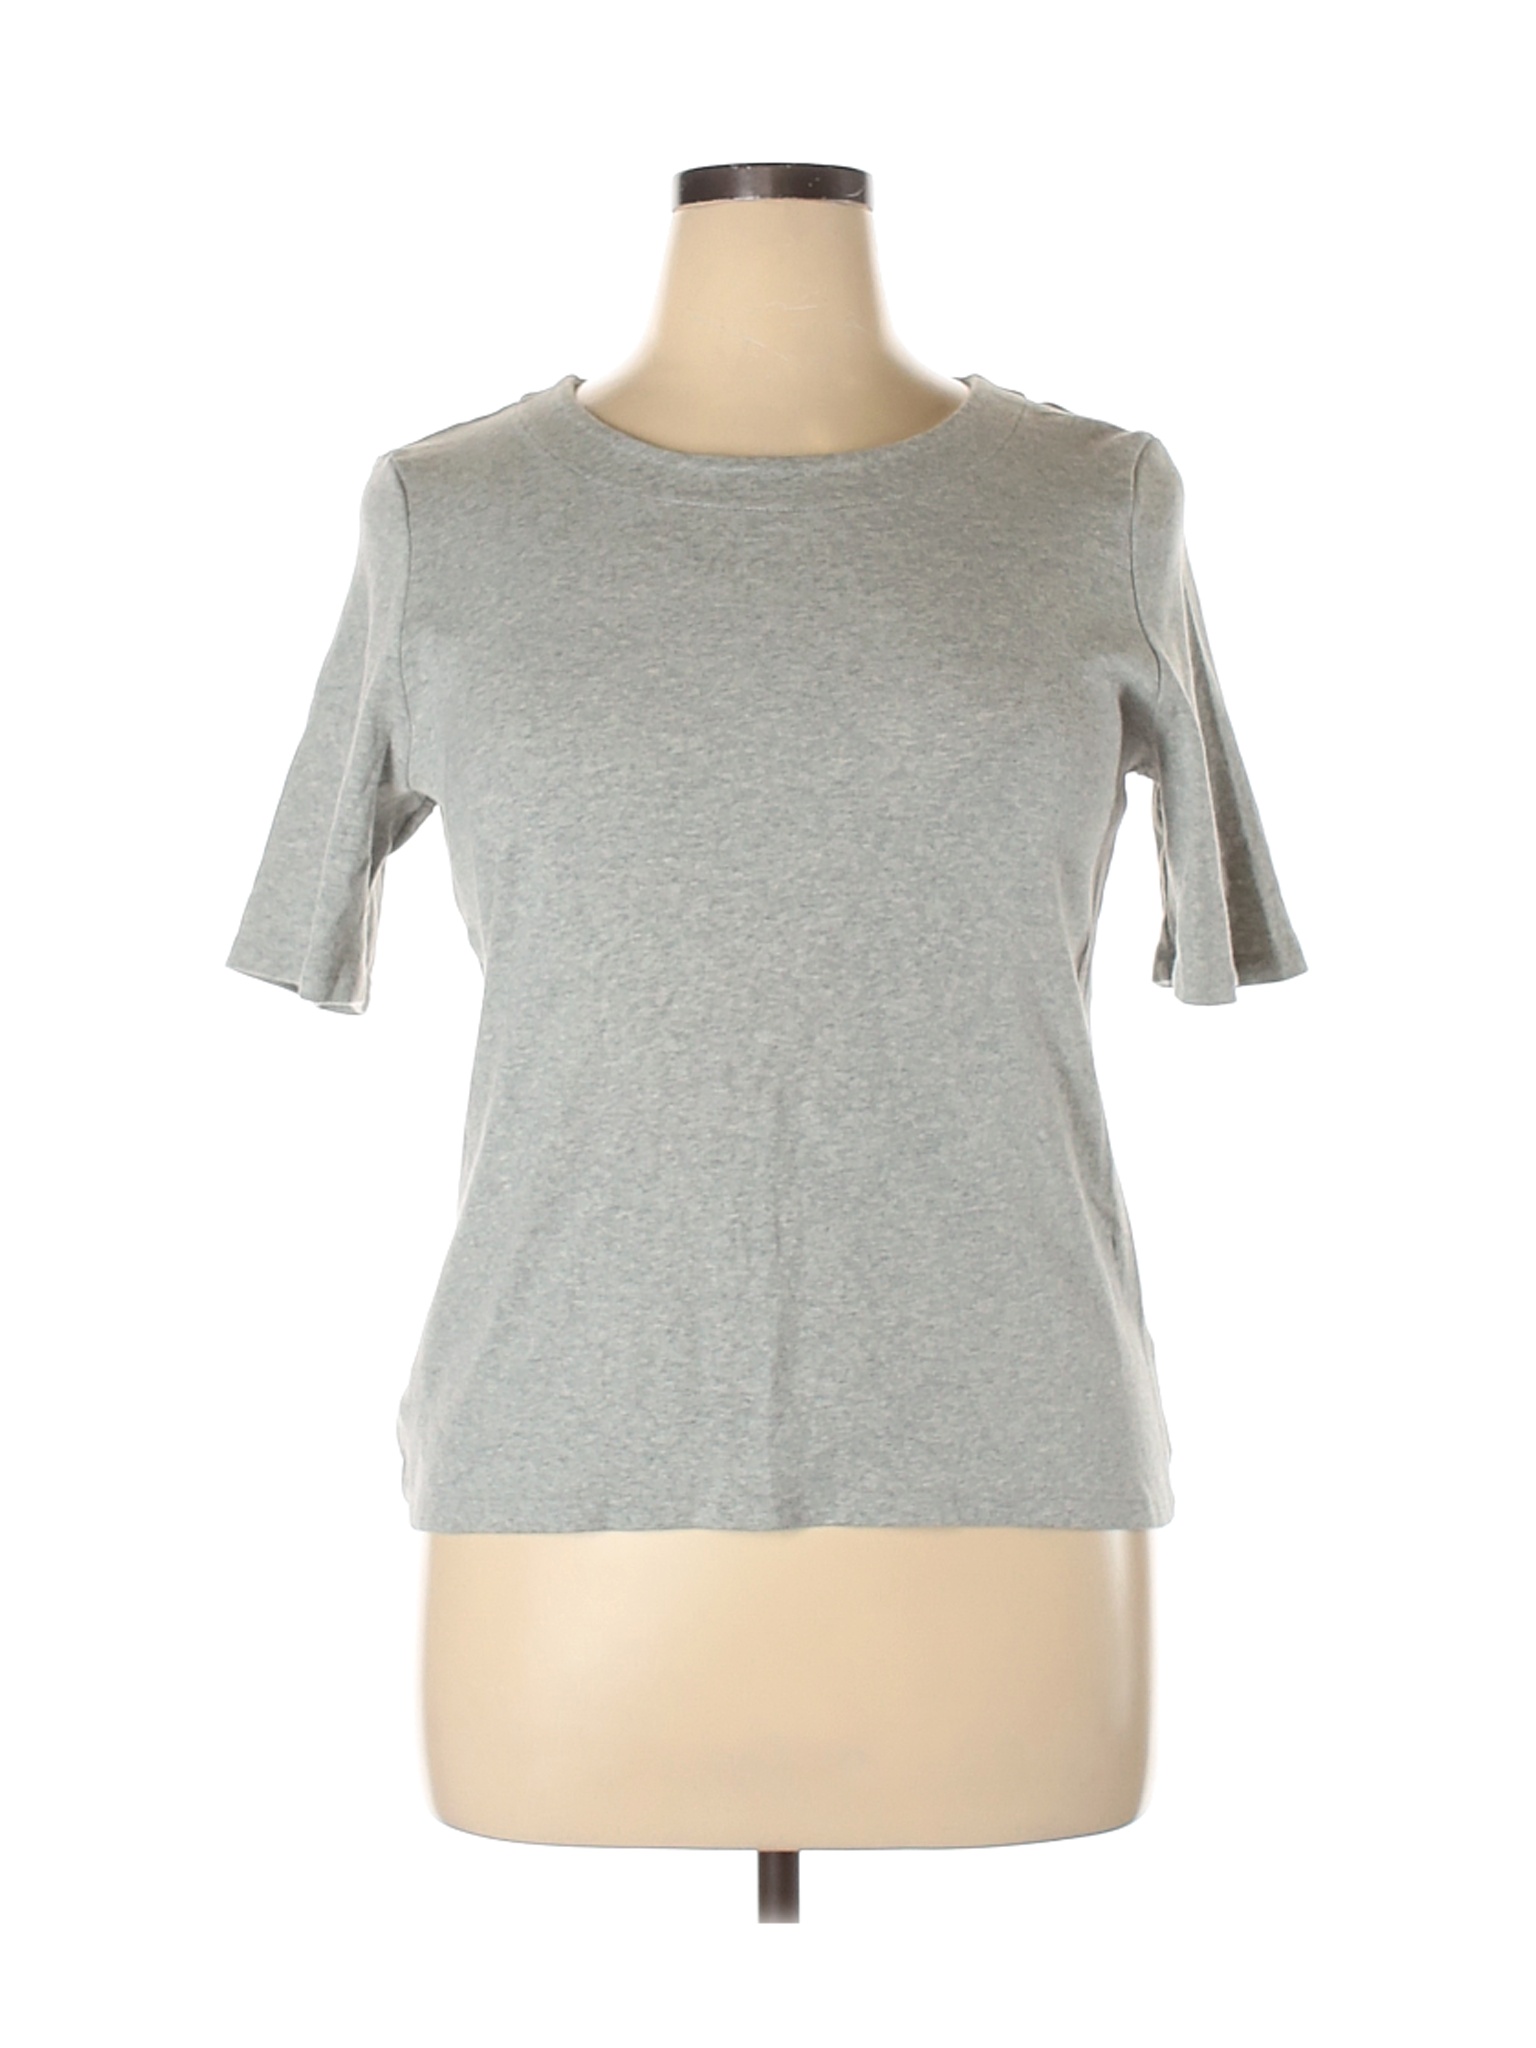 Talbots Outlet Women Gray Short Sleeve T-Shirt XL | eBay